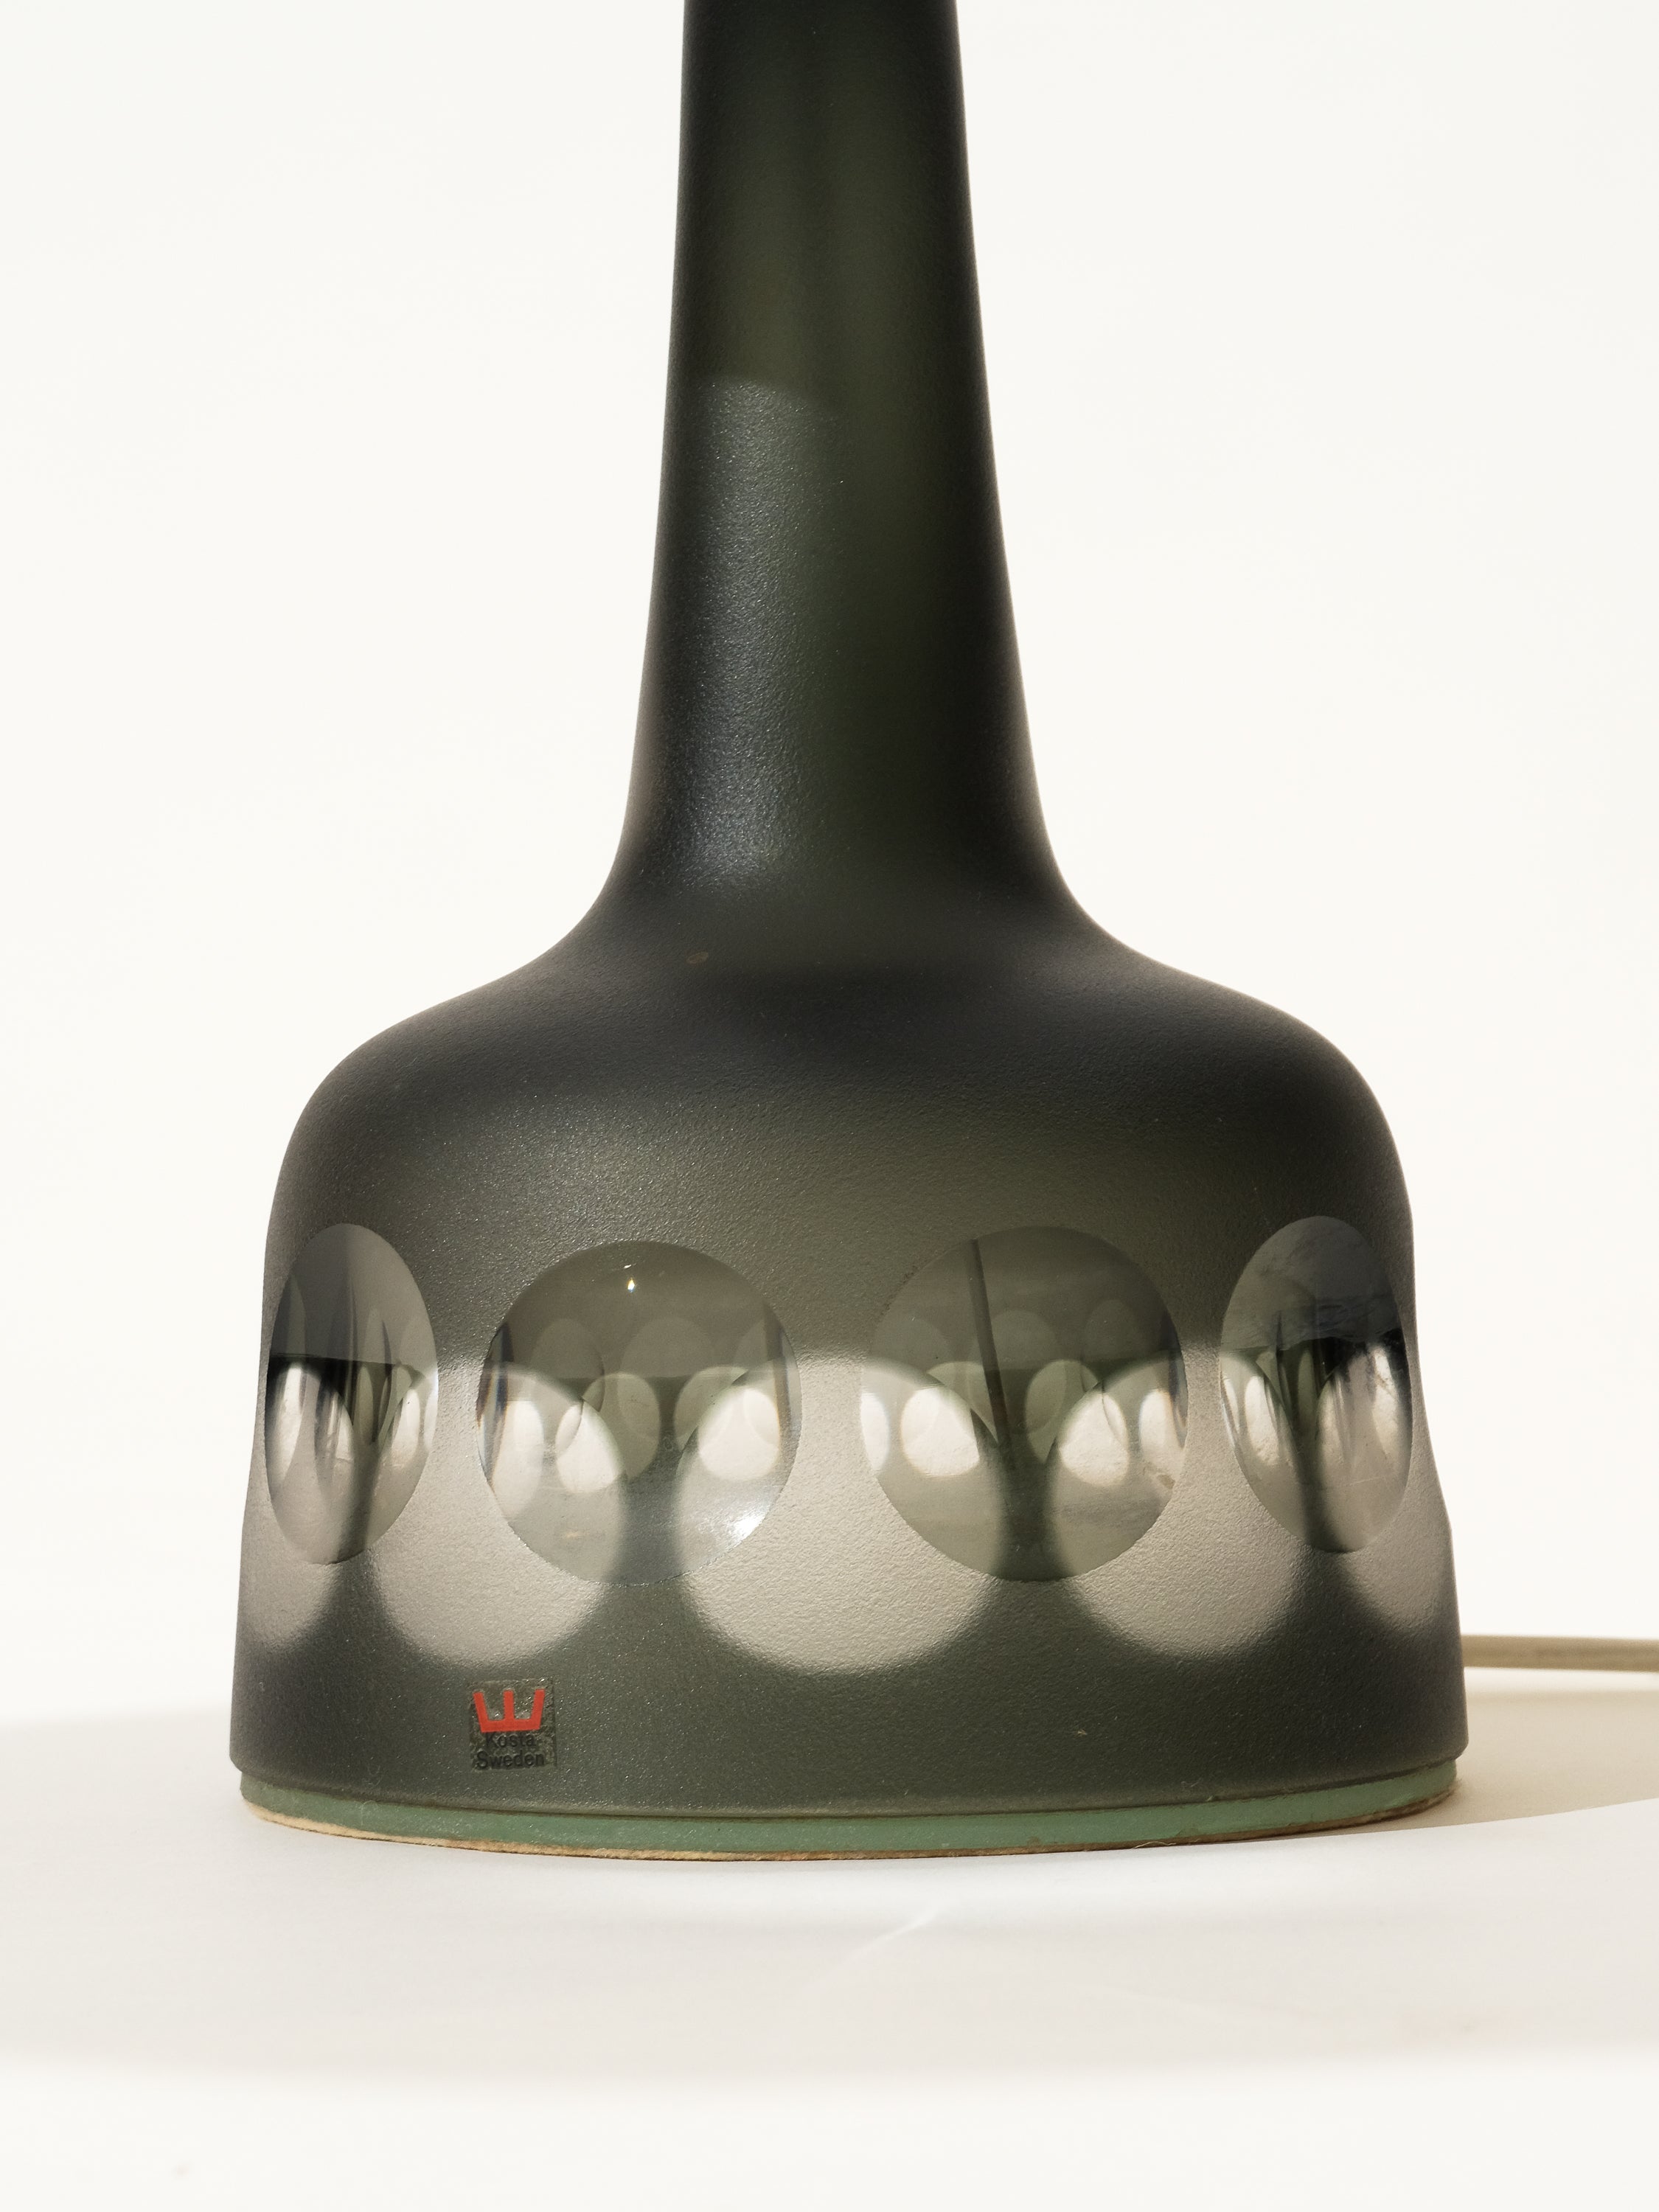 Glass Table Lamp by Ove Sandeberg for Kosta Boda, 1960s